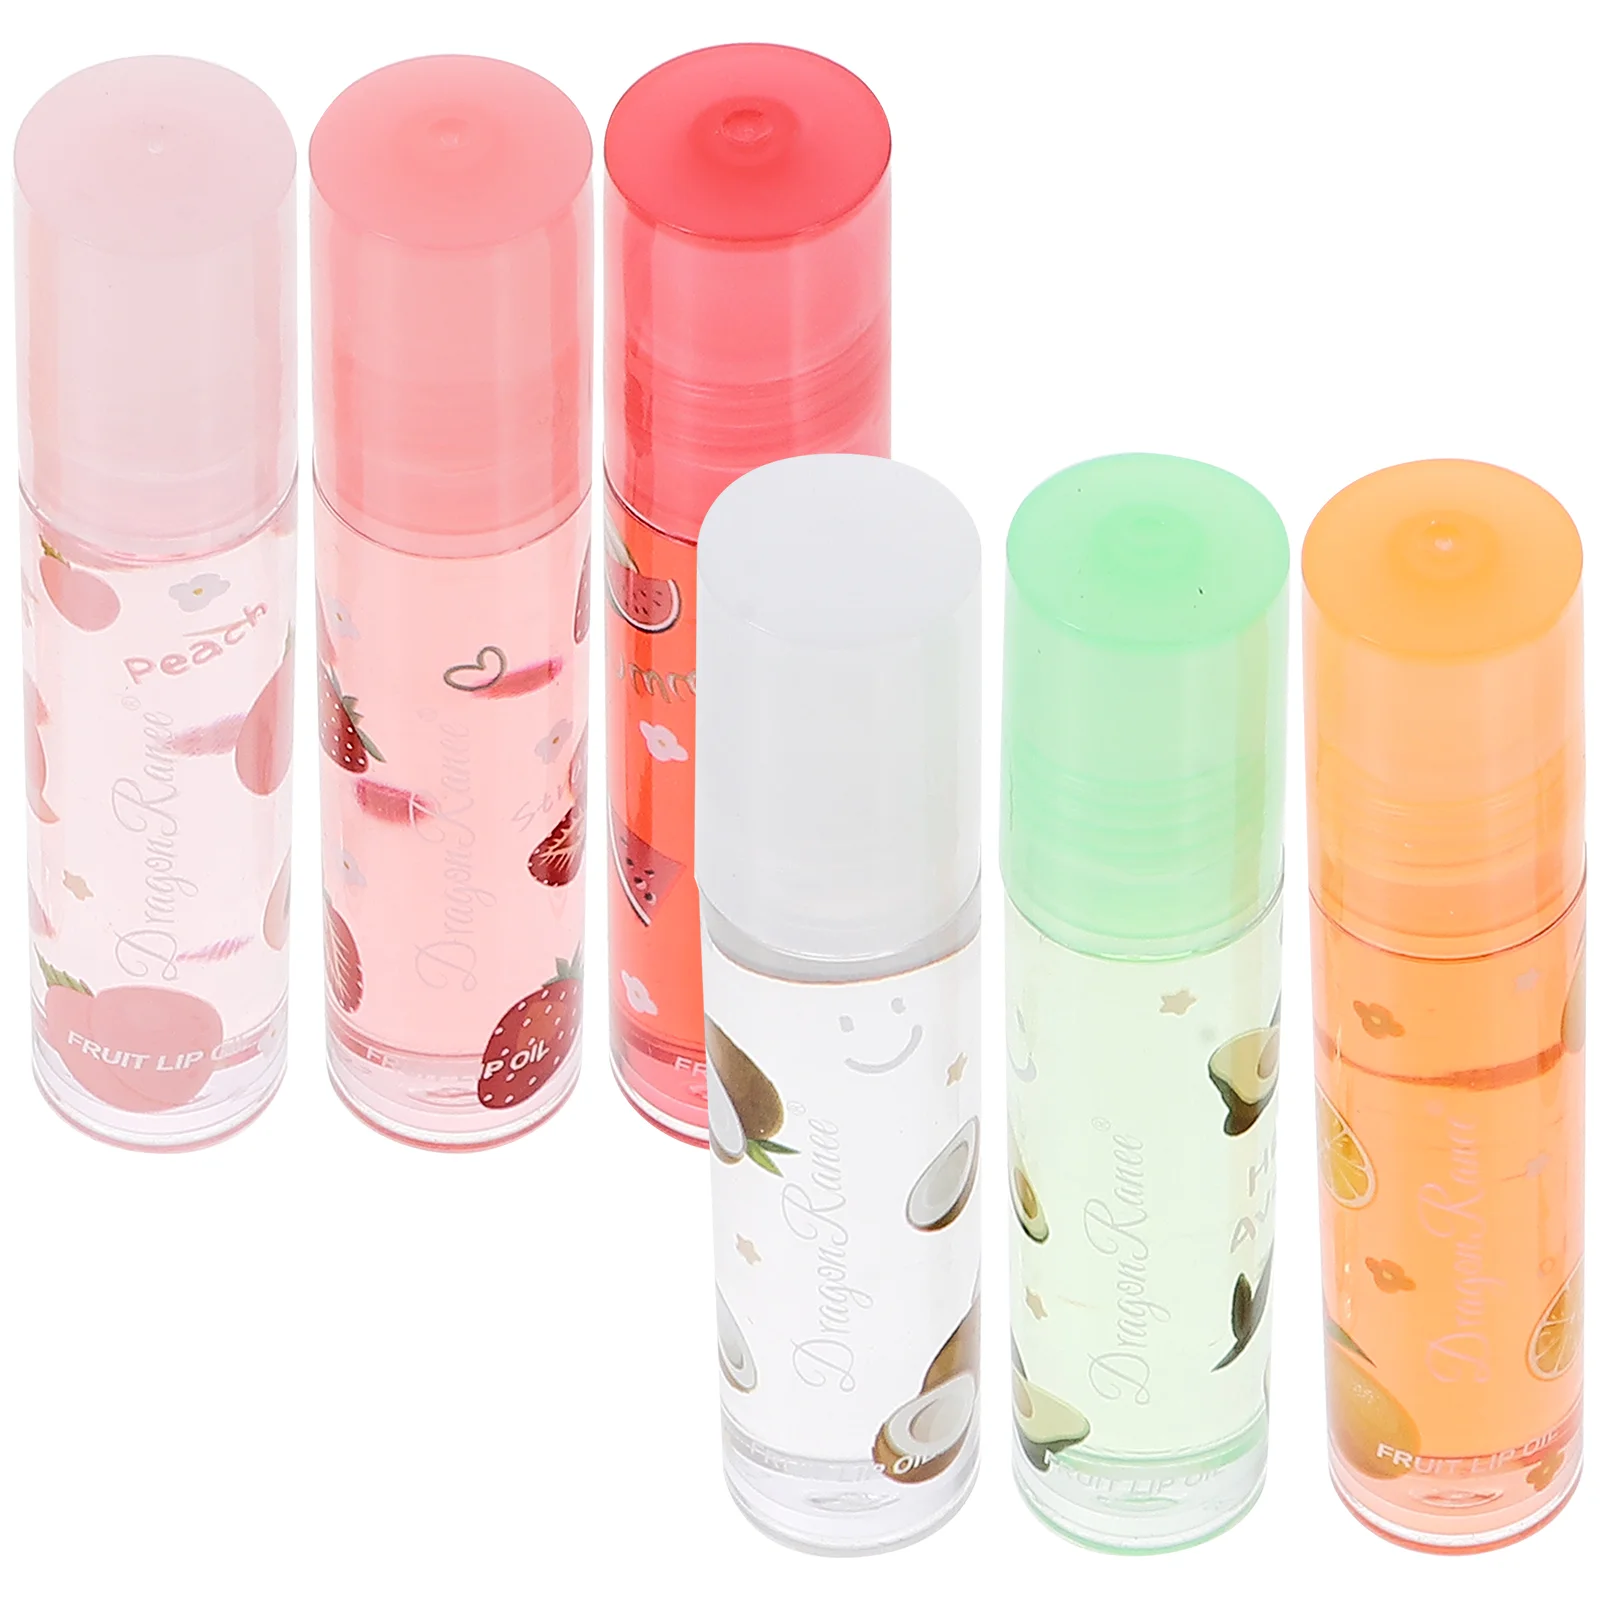 

Minkissy Lip Gloss Clear Fruit Lip Gloss 6Pcs Fruit Lip Glosses Transparent Colorless Moisturizing Lip Pomades Fruit-